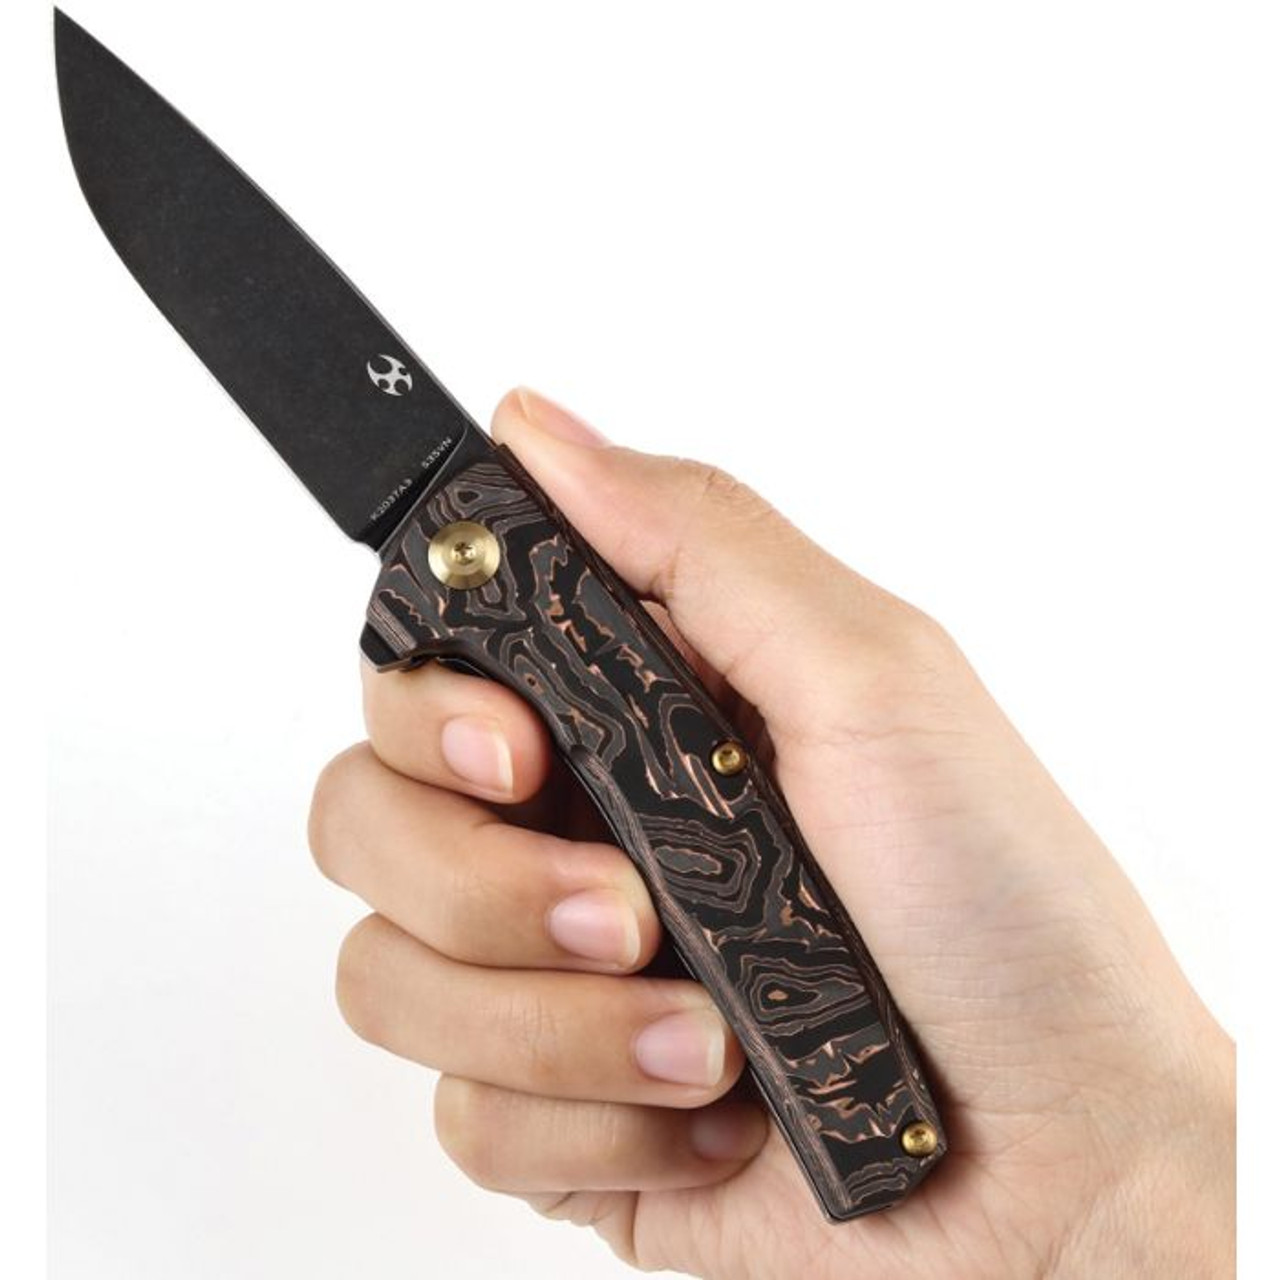 Kansept Knives AGI (K2037A3) 2.94" CPM-S35VN Blackwashed Drop Point Plain Blade, Copper Foil Carbon Fiber Handle with Blackwashed Titanium Back Handle